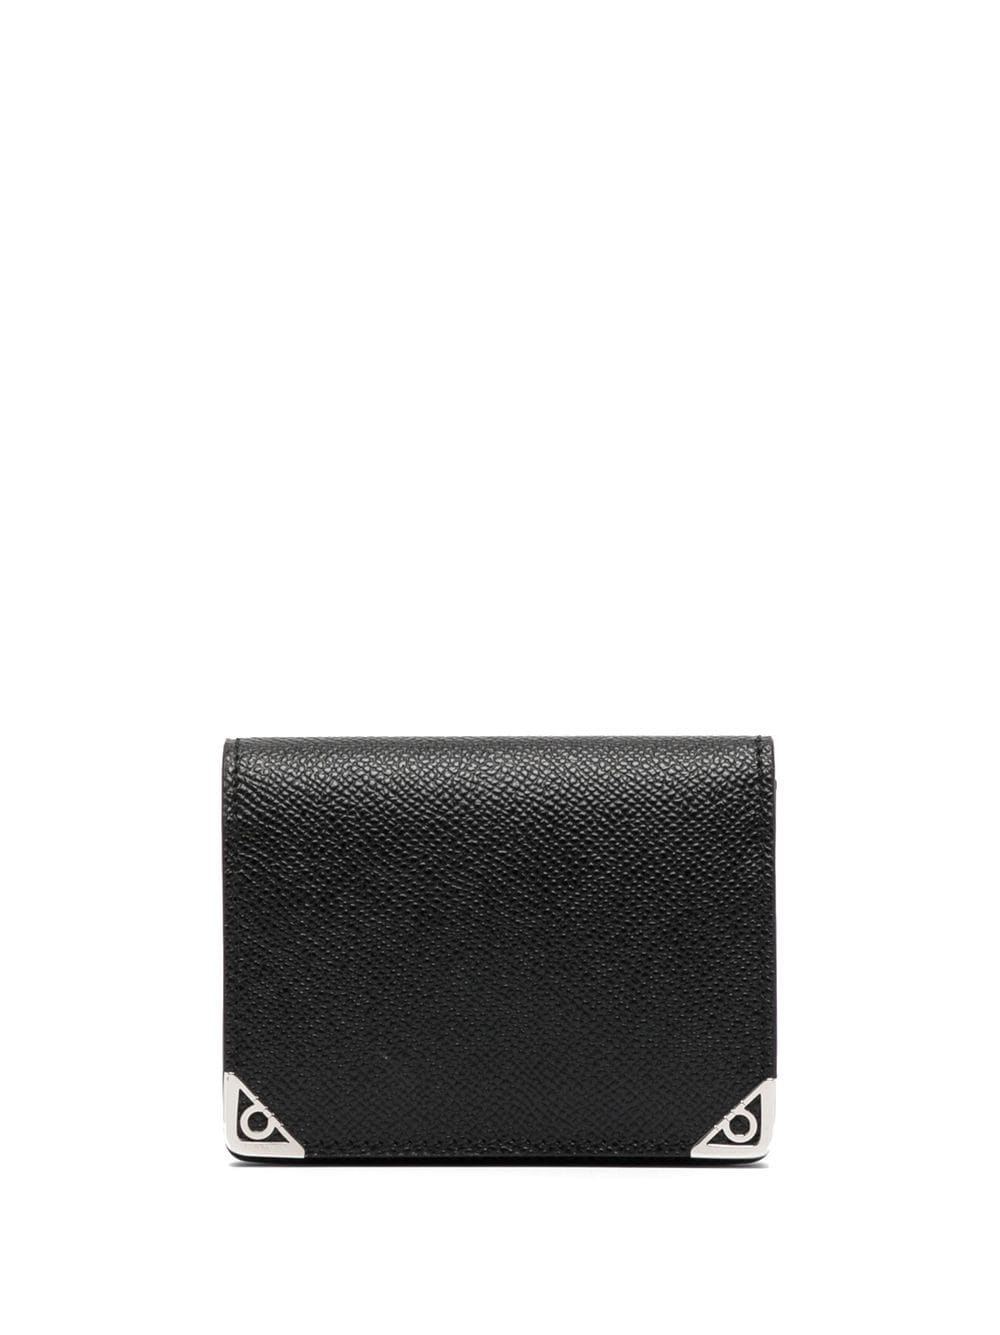 Ferragamo grained leather wallet - Black von Ferragamo